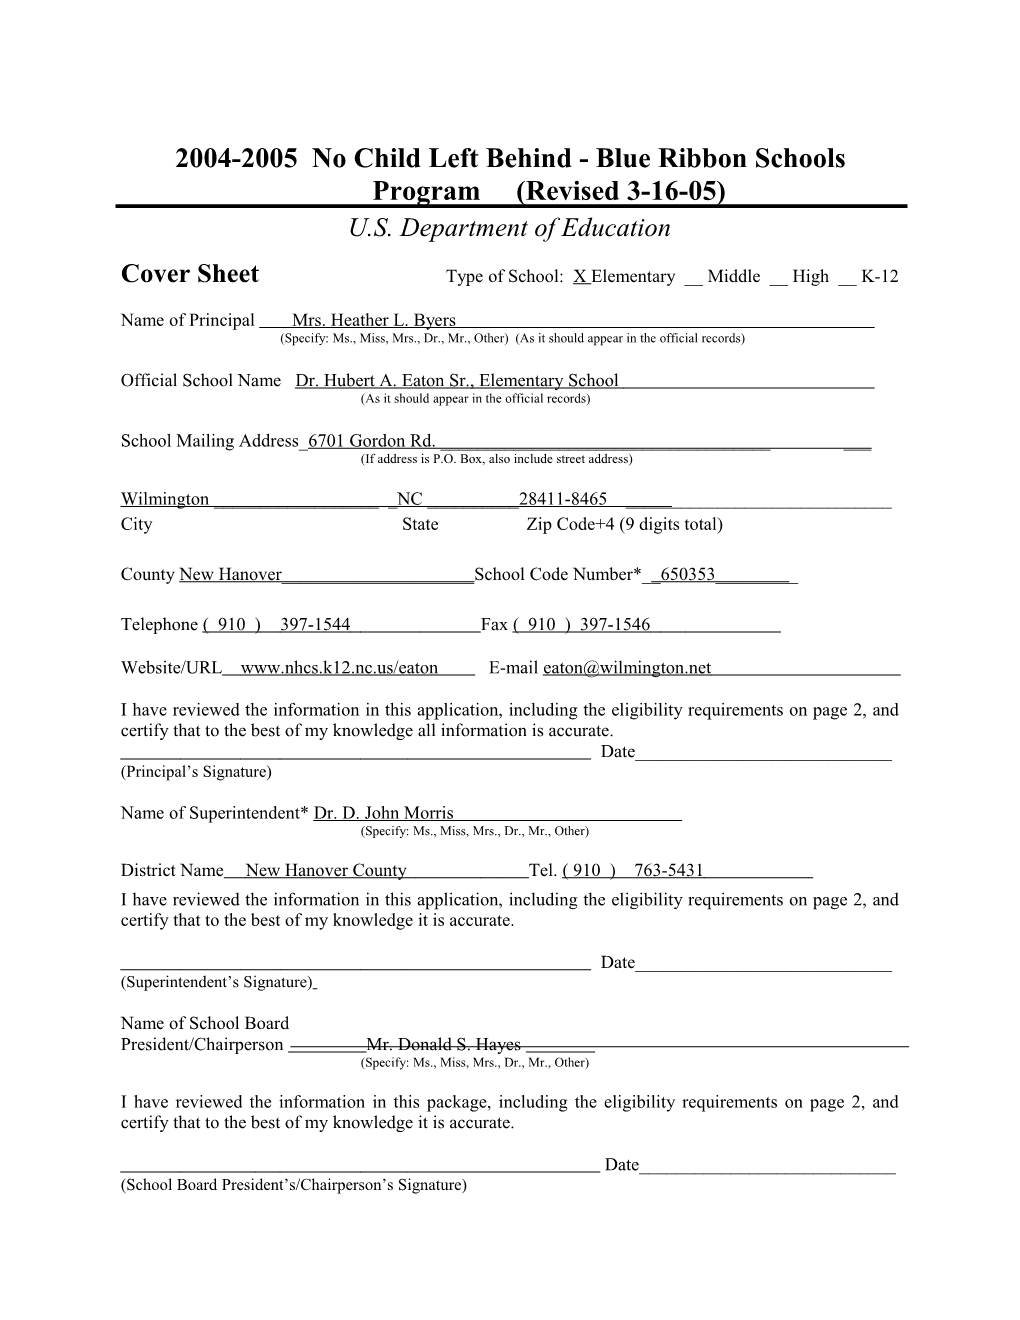 Dr. Hubert A. Eaton Sr. Elementary School Application: 2004-2005, No Child Left Behind